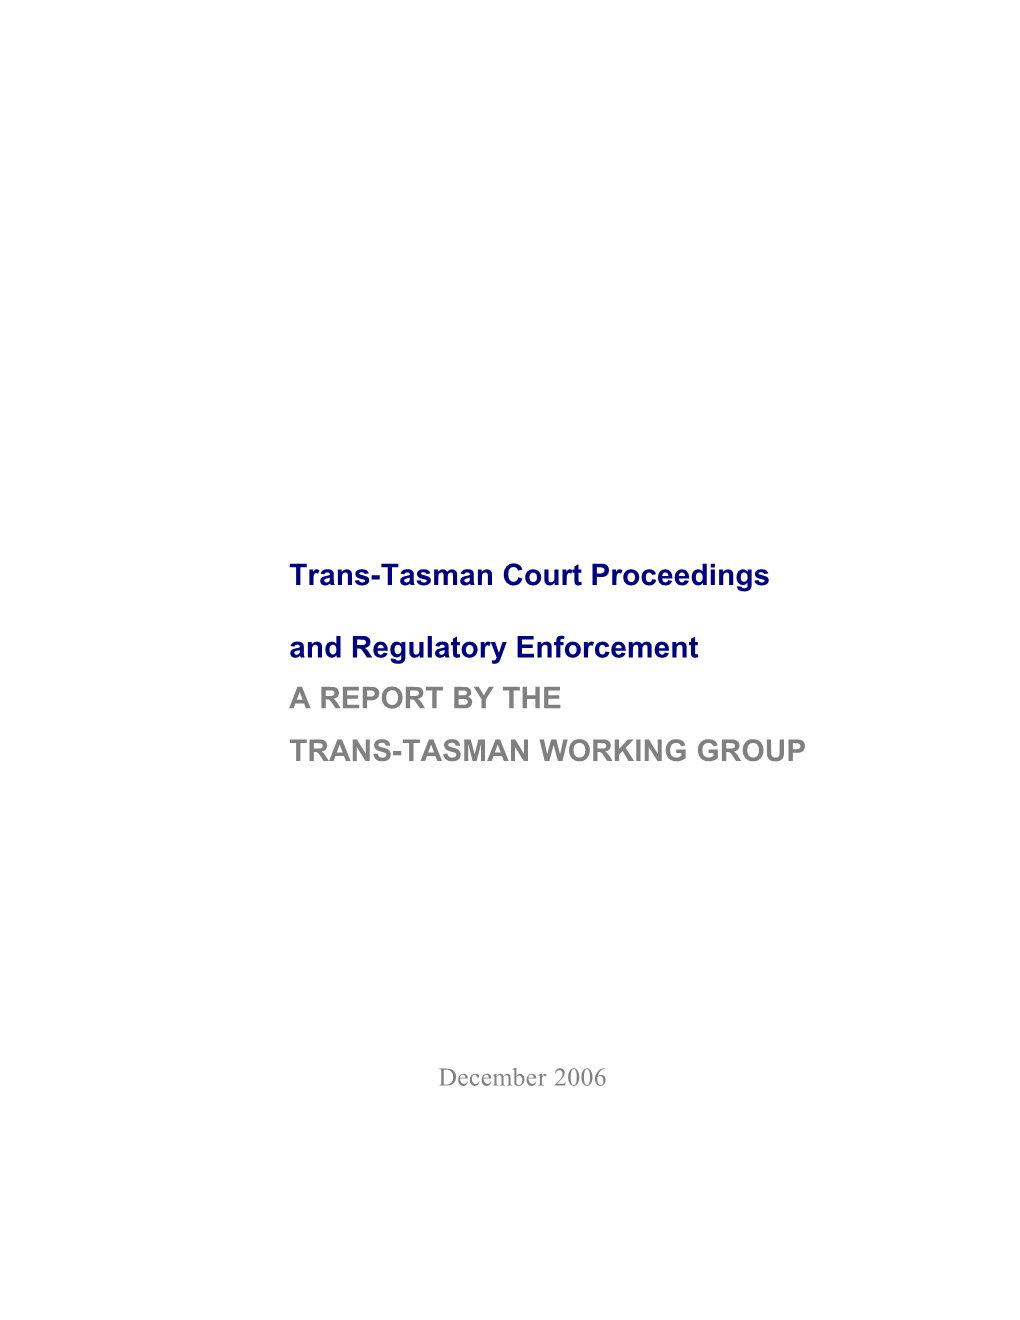 Trans-Tasman Court Proceedings and Regulatory Enforcement Report 2006